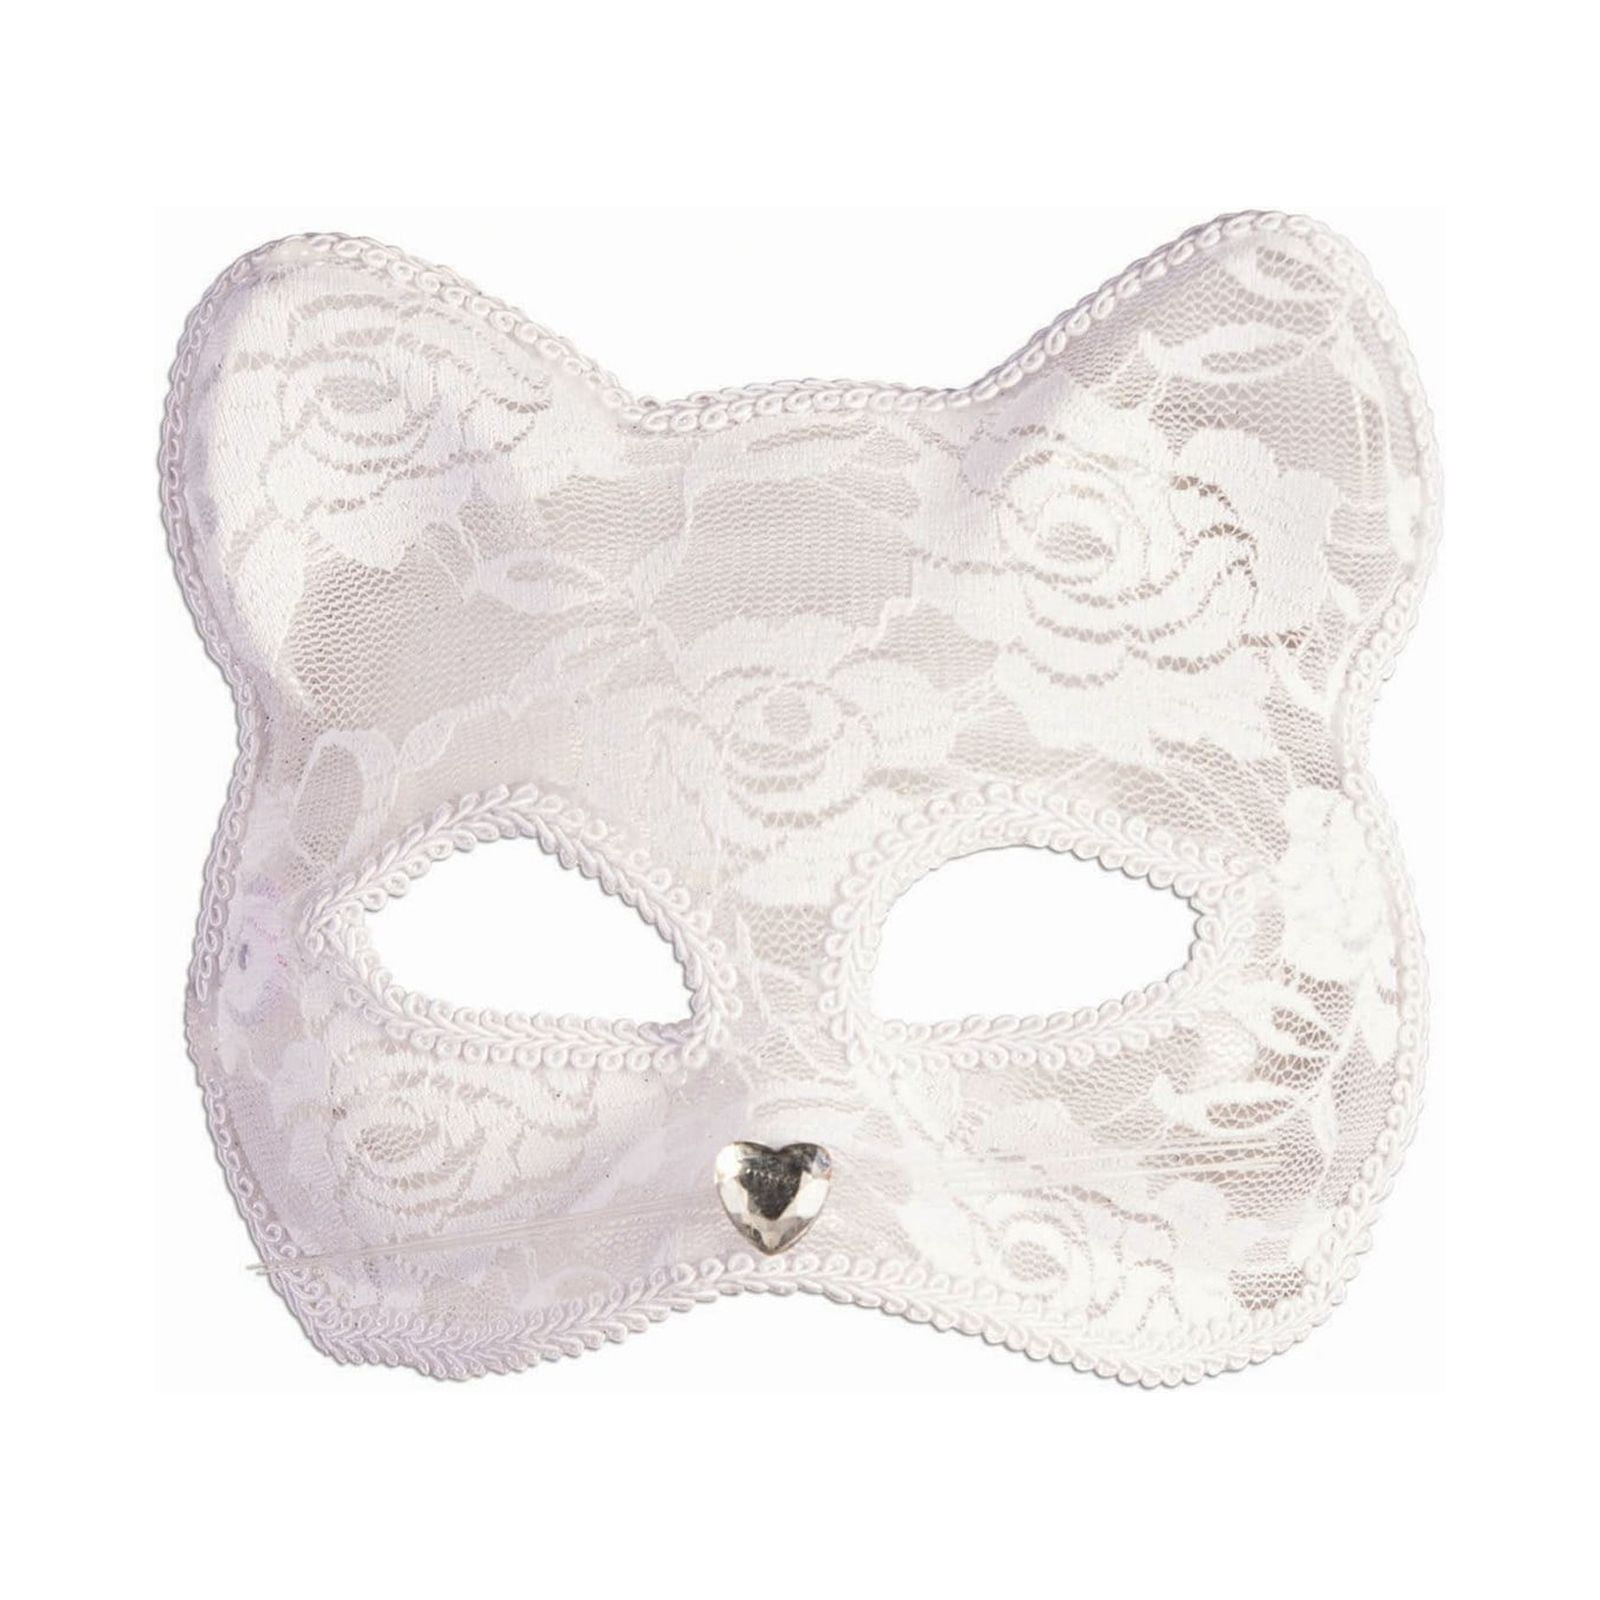 White and Black Cat Face Mask Mardi Gras Masquerade Ball